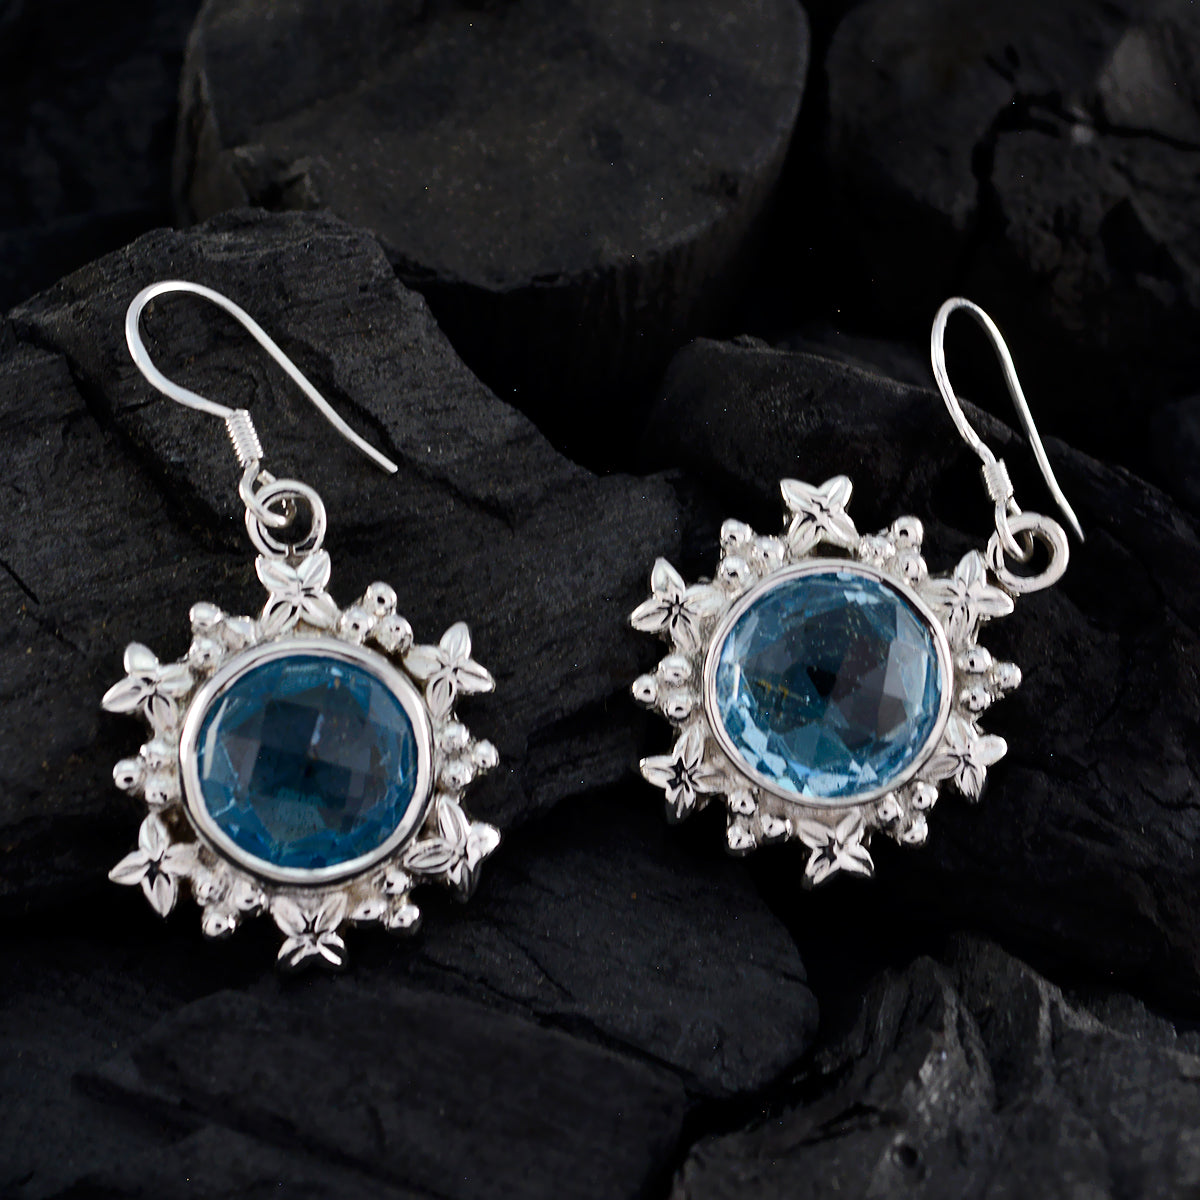 Riyo Natural Gemstone round Checker Blue Topaz Silver Earrings gift for anniversary day